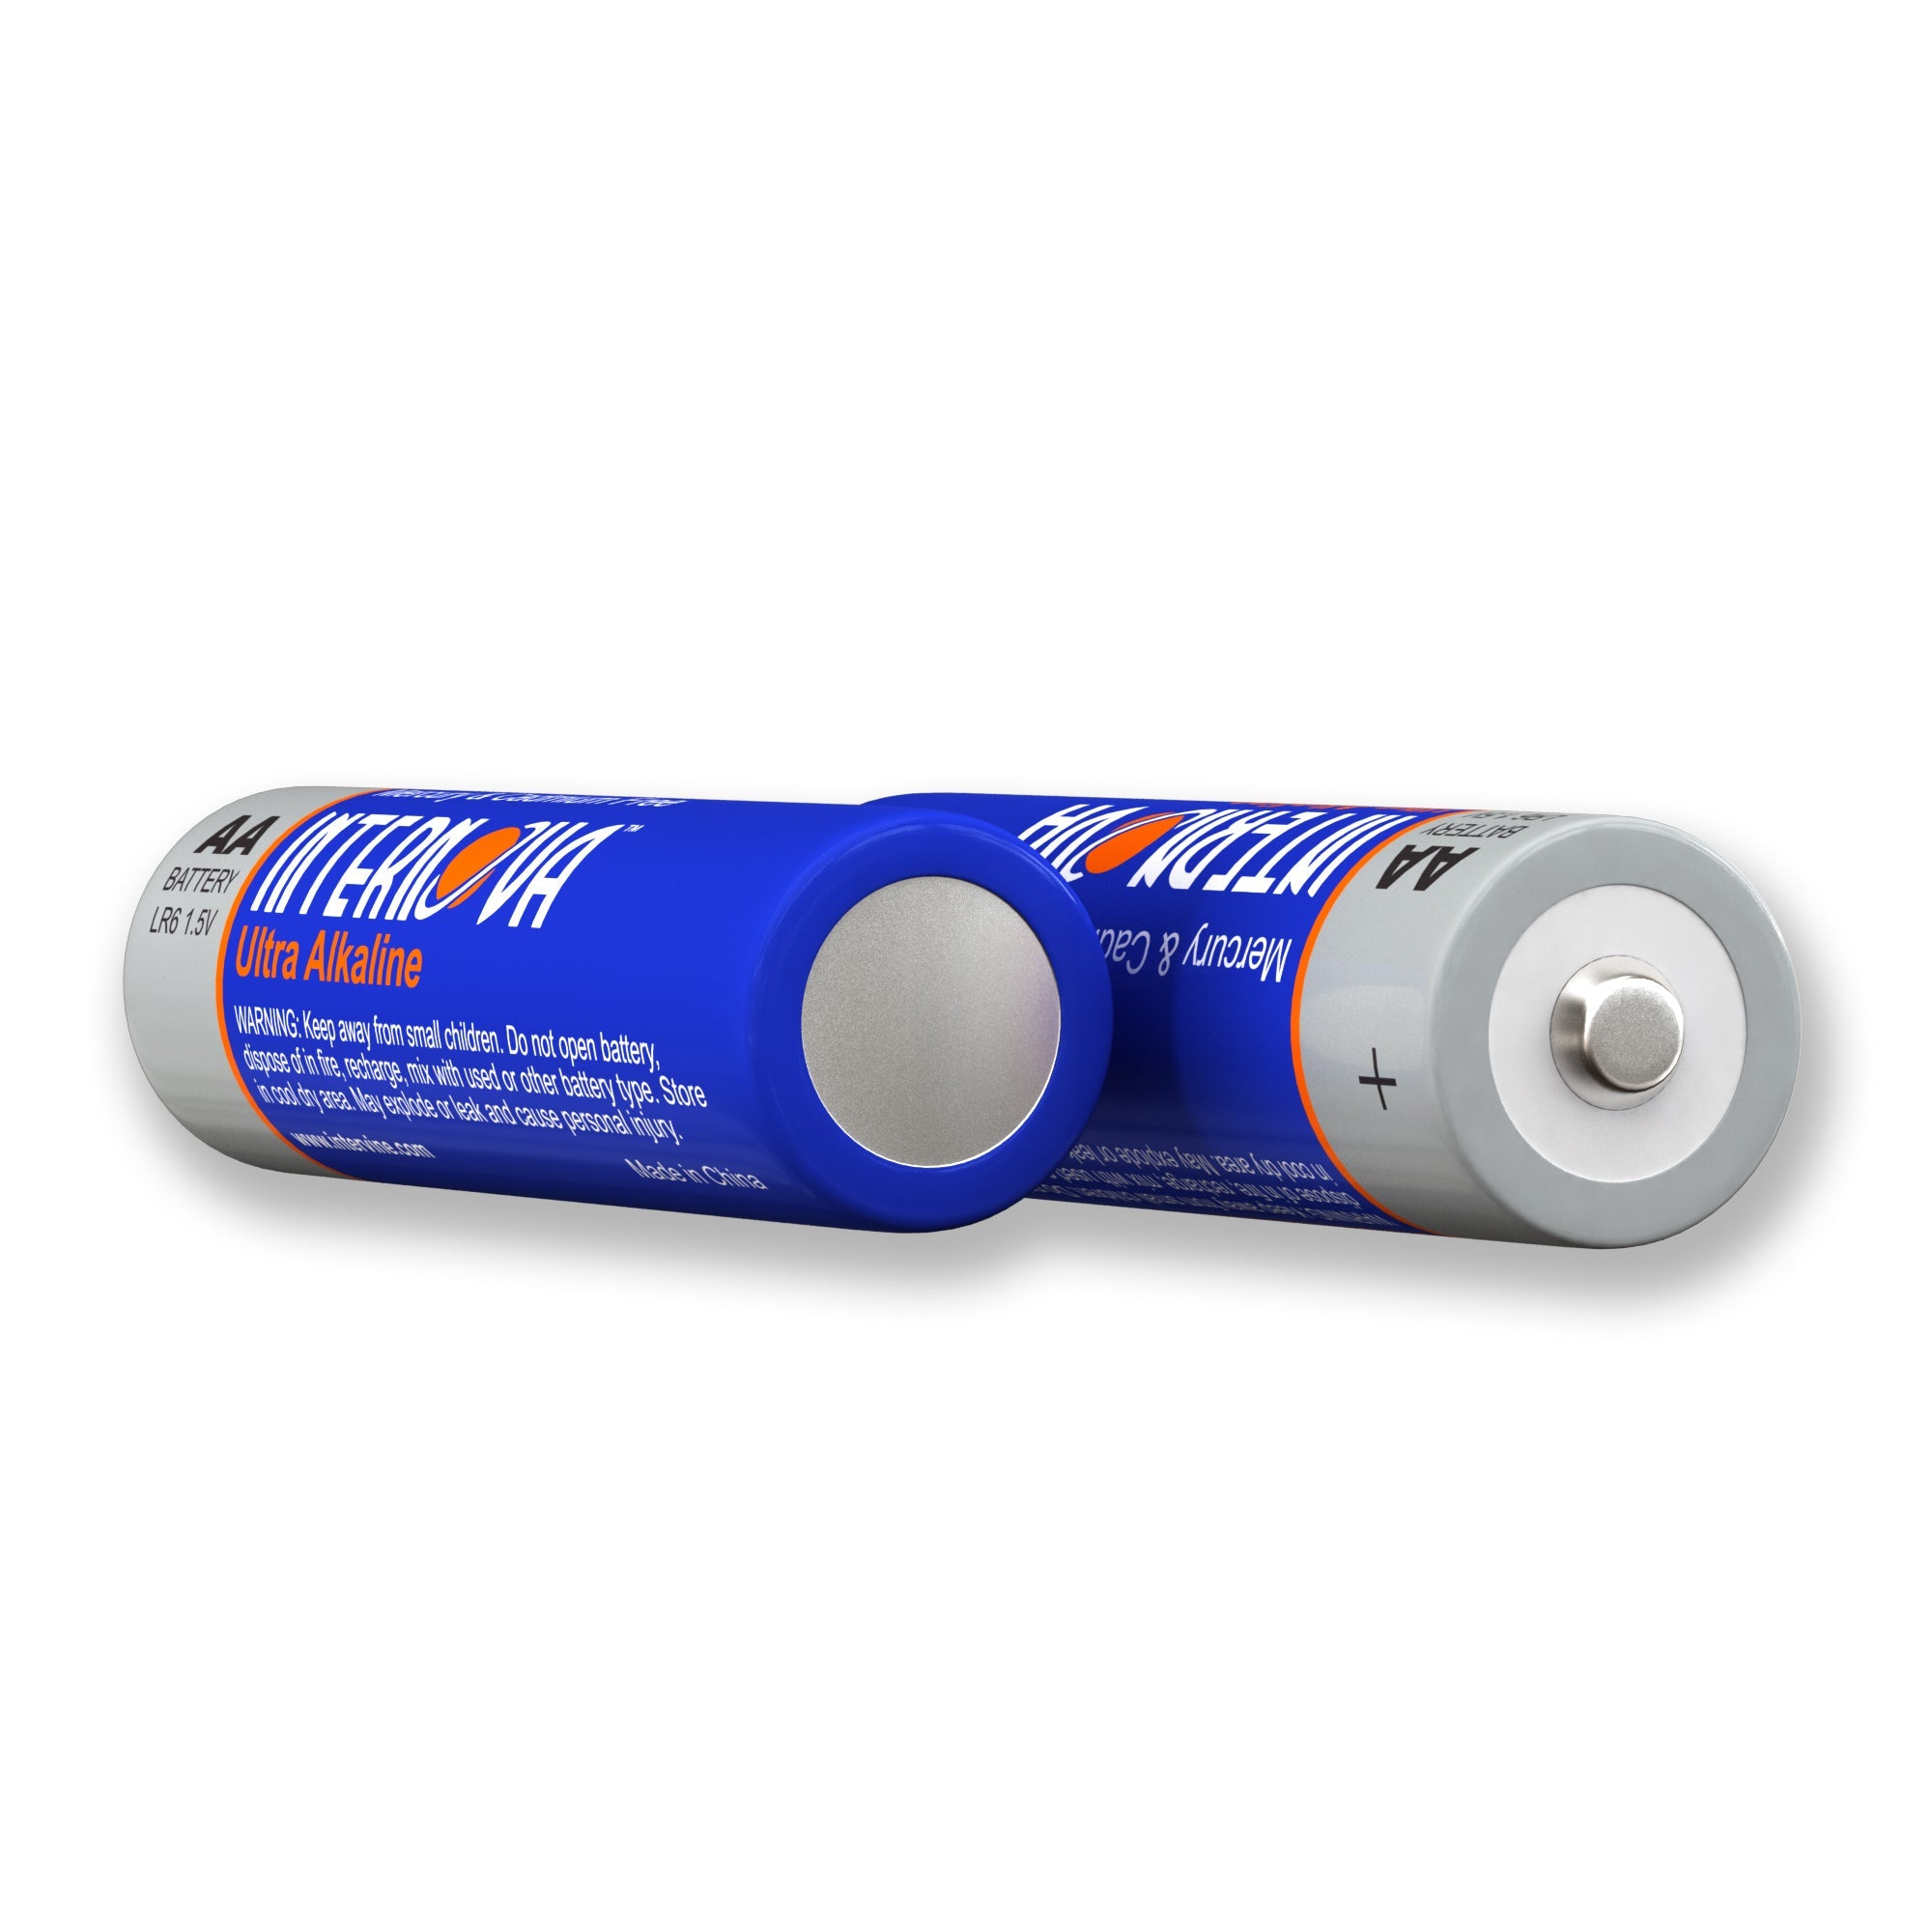 Internova Ultra Alkaline AA Batteries, Double A LR6 1.5V Cell High Performance, 4 Pack